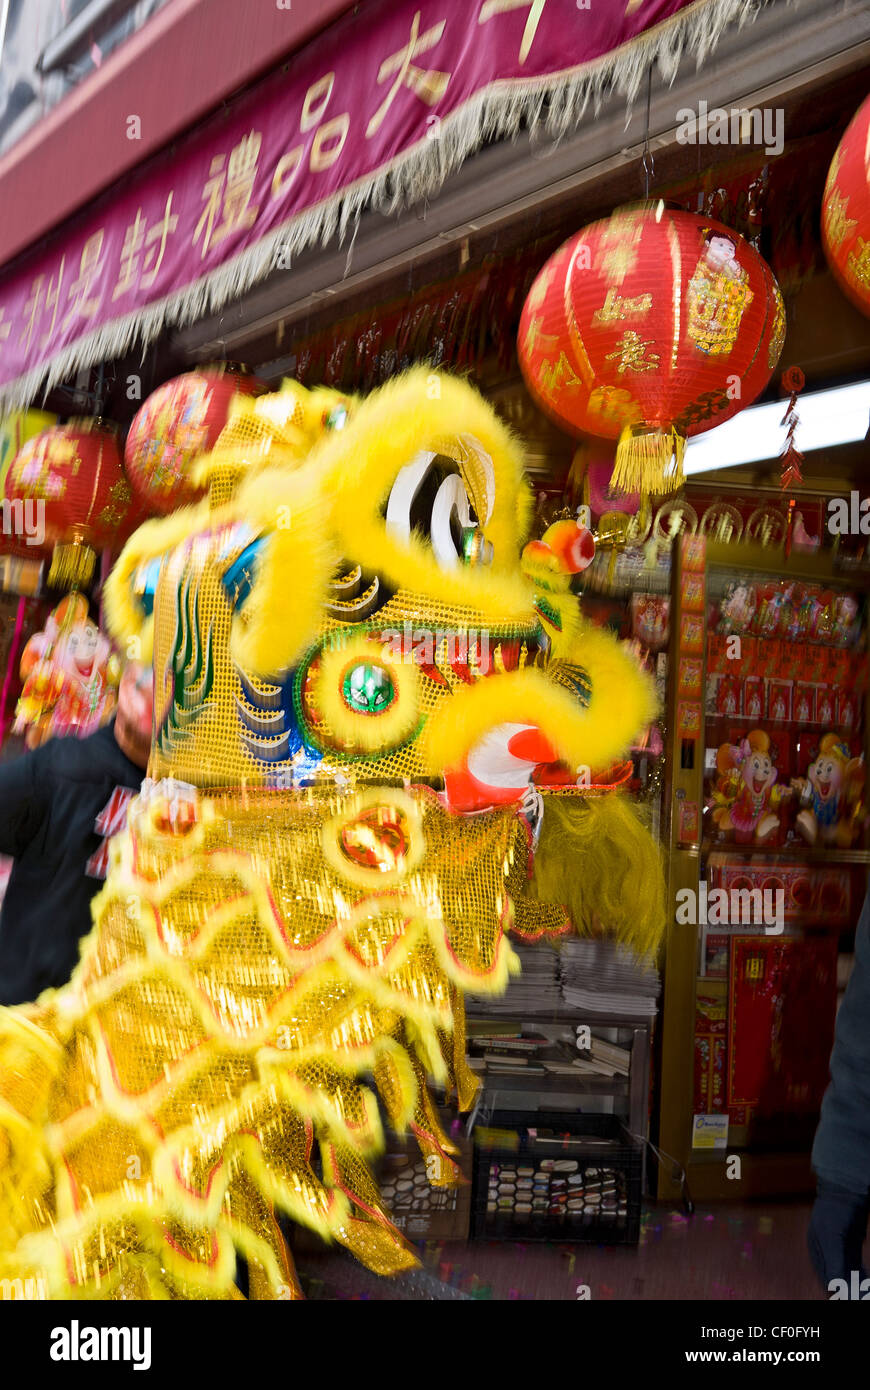 Chinese New Year celebration Chinatown New York City dragon dance lion dance Stock Photo